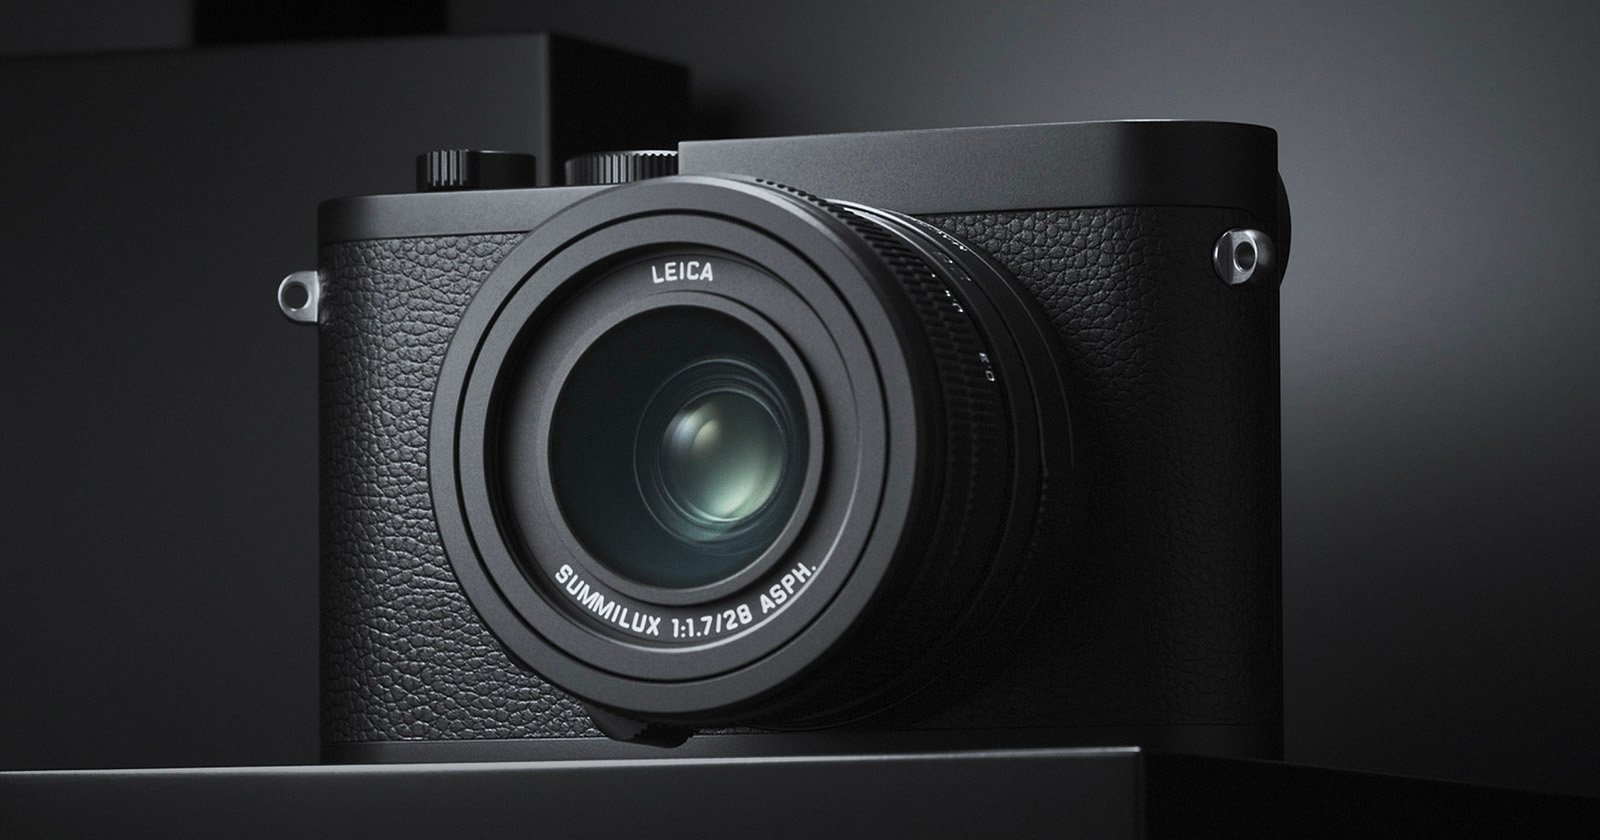 Leica Unveils the Q2 Monochrom: 46.7 Megapixels, 28mm f/1.7 Fixed-Lens